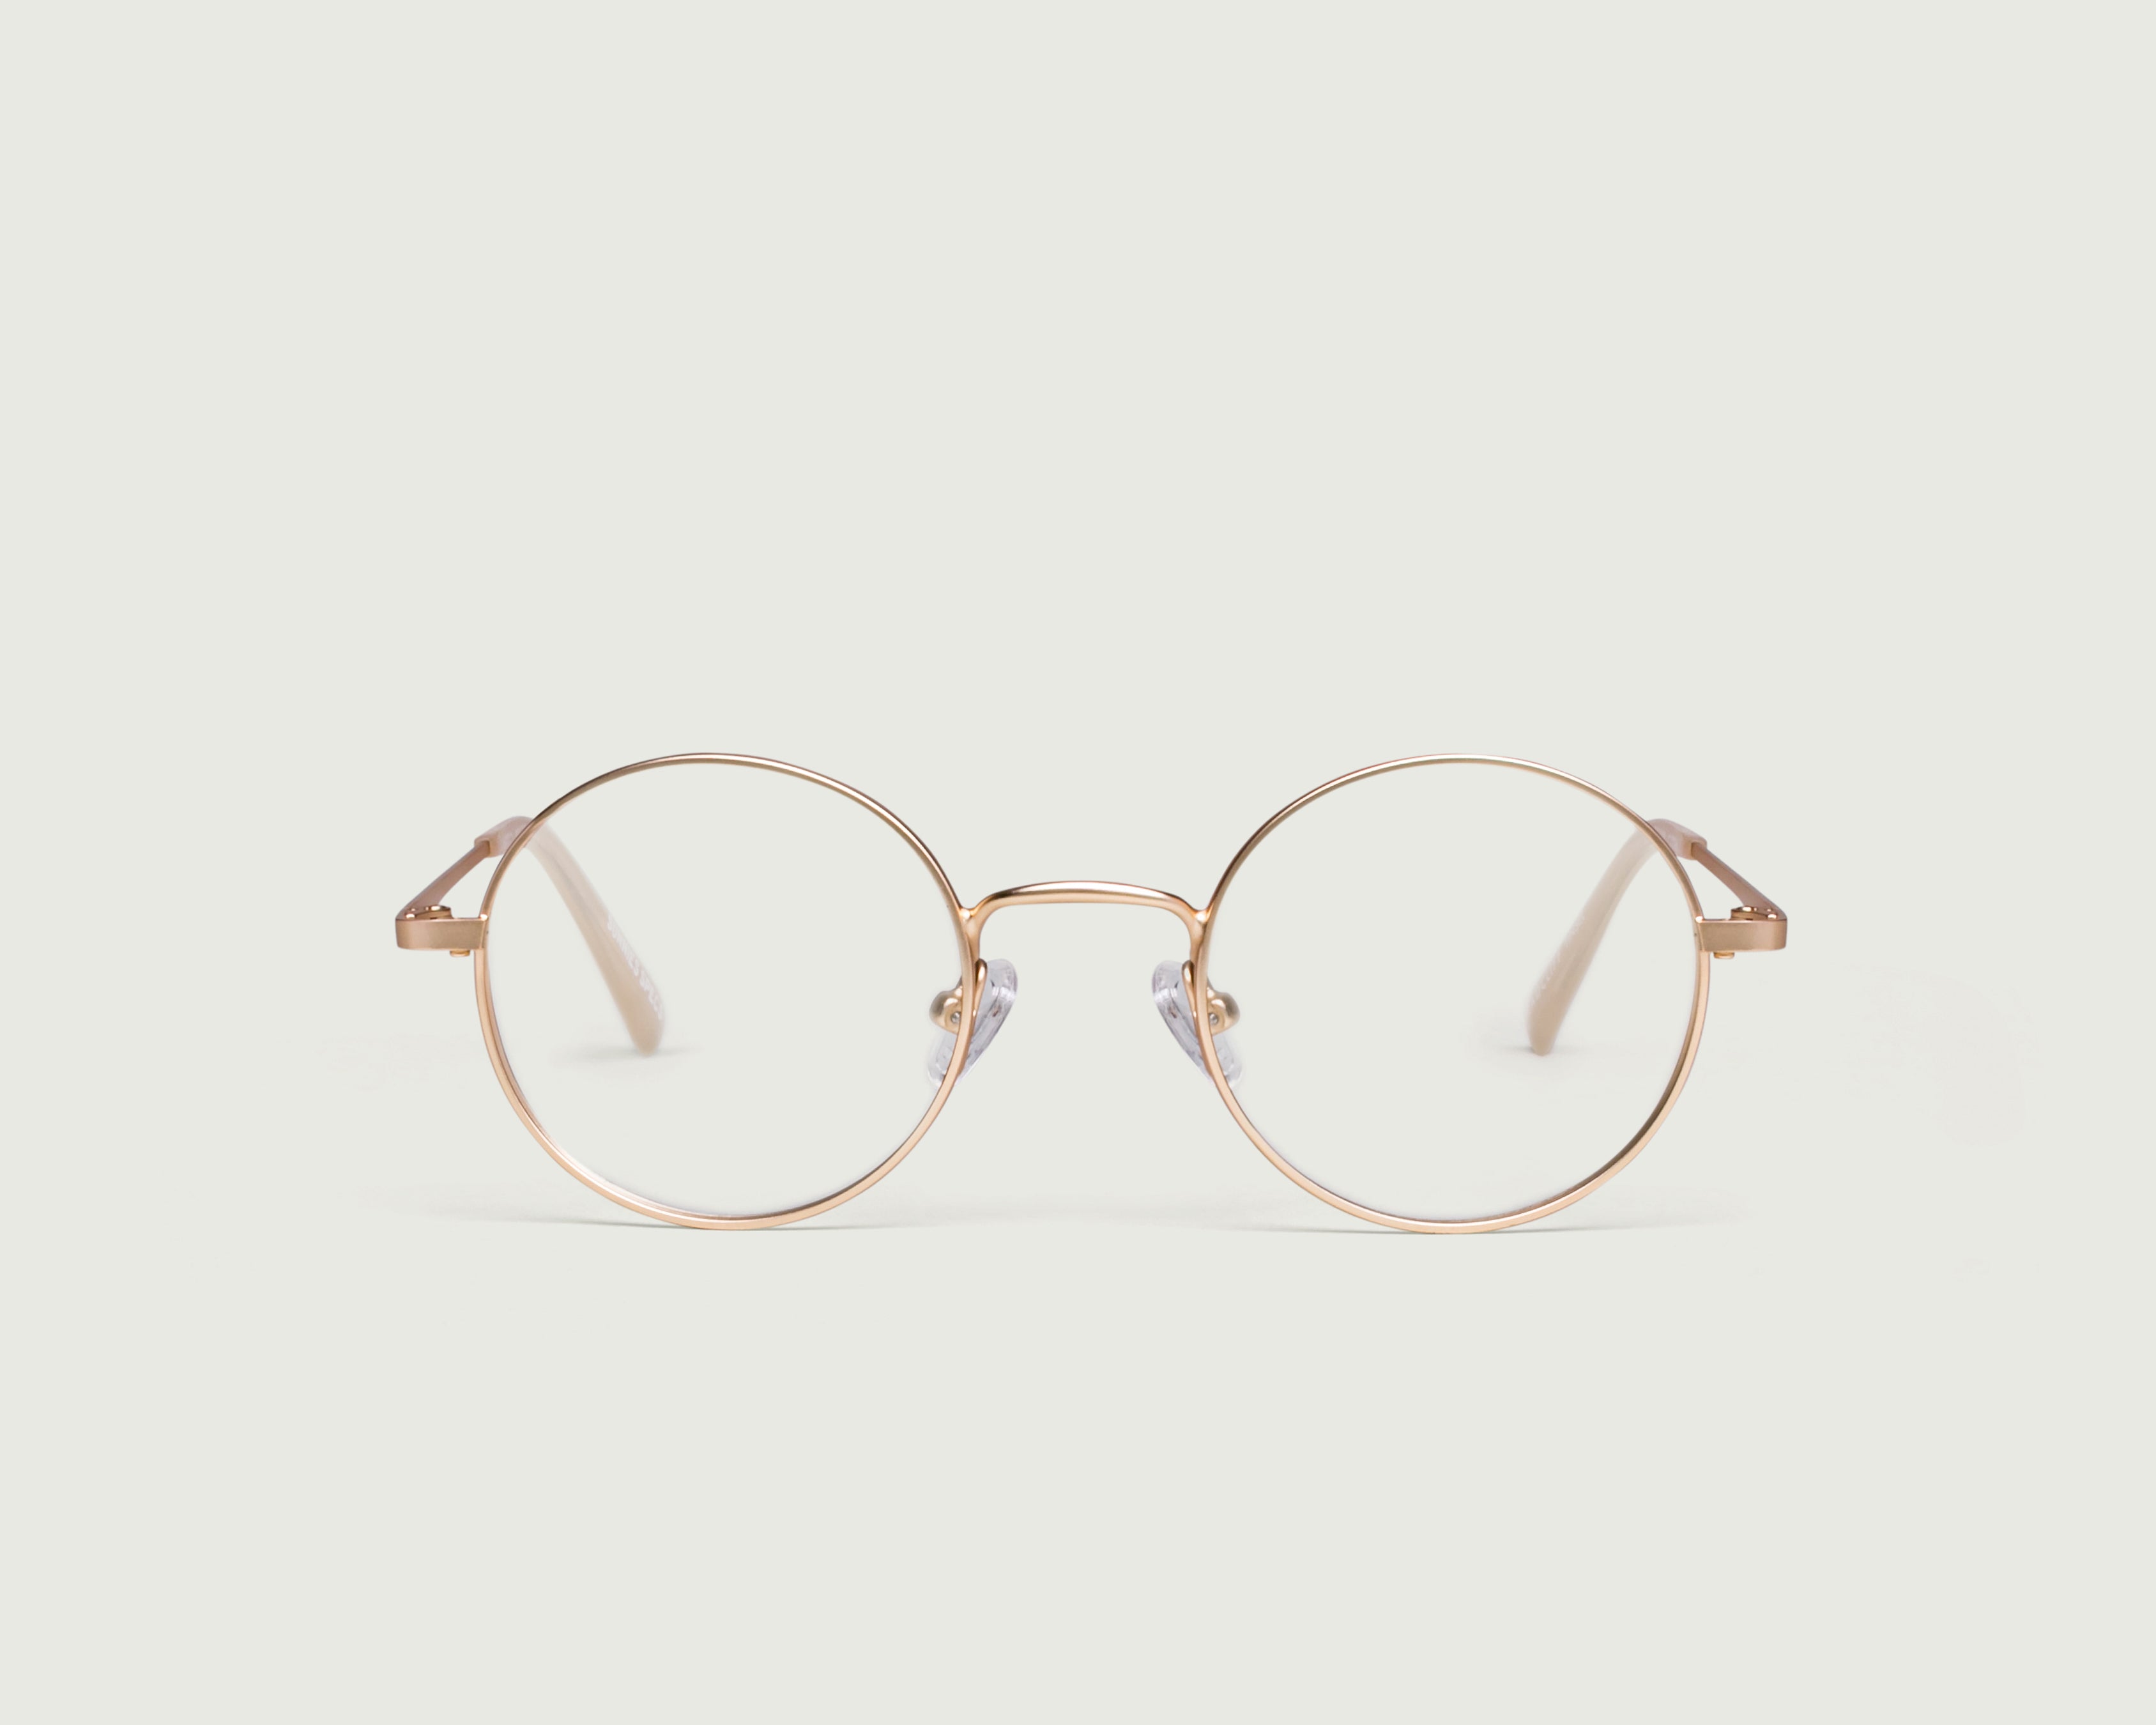 Tinsel::Radcliff Eyeglasses round gold metal front